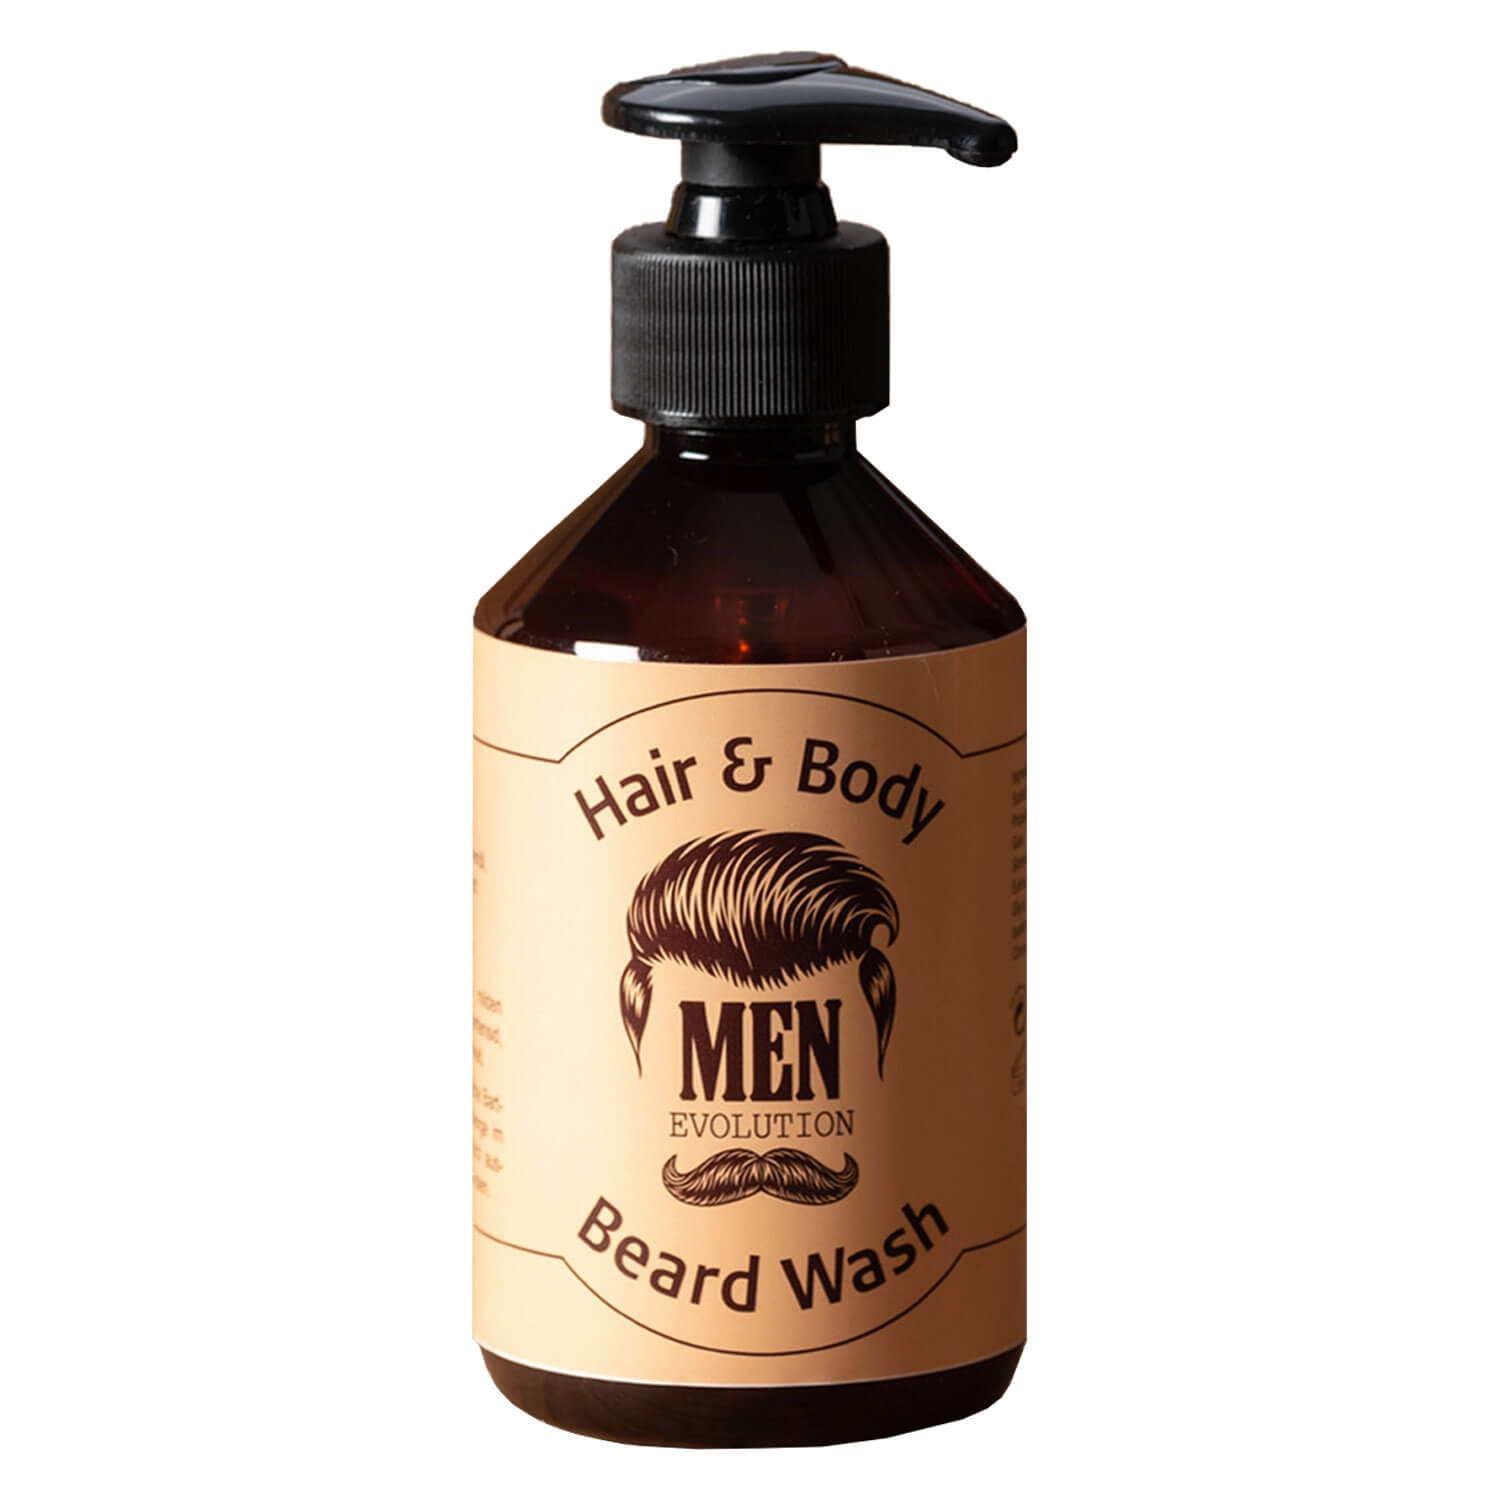 Image du produit de MEN Evolution - Hair & Body Beard Wash